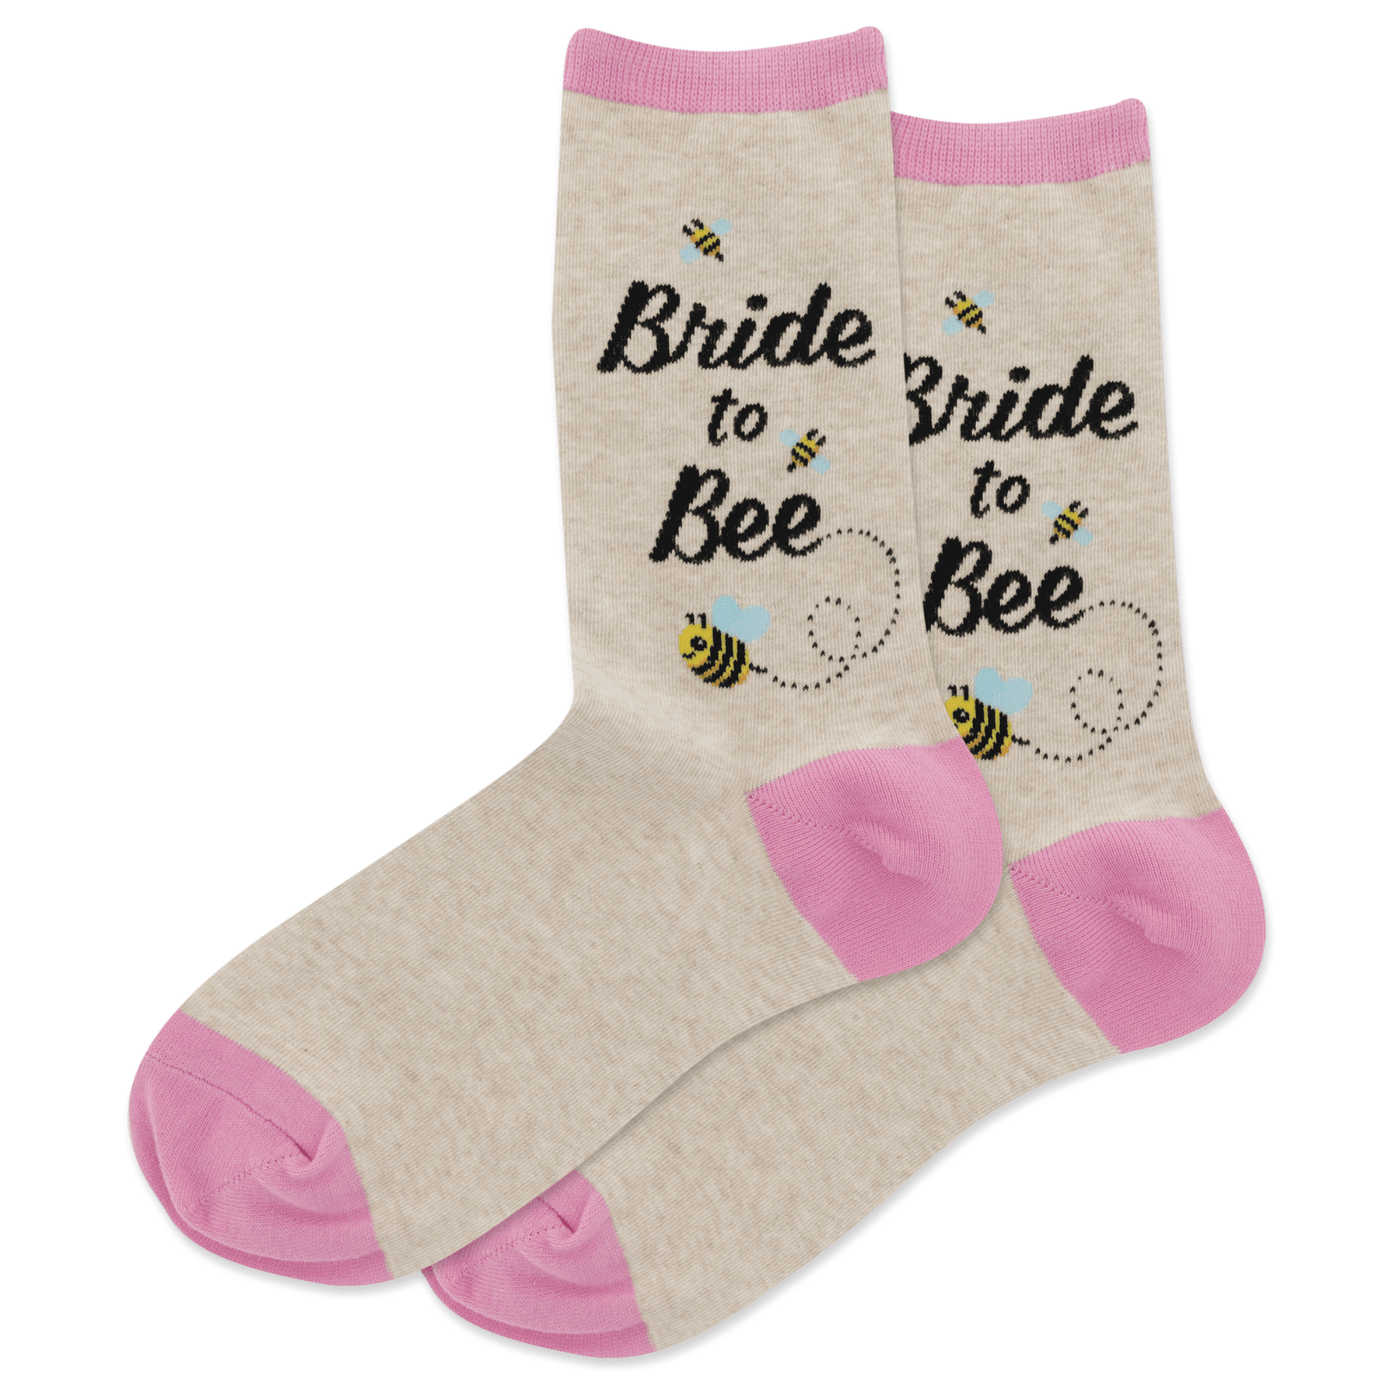 "bride to bee" animal socks